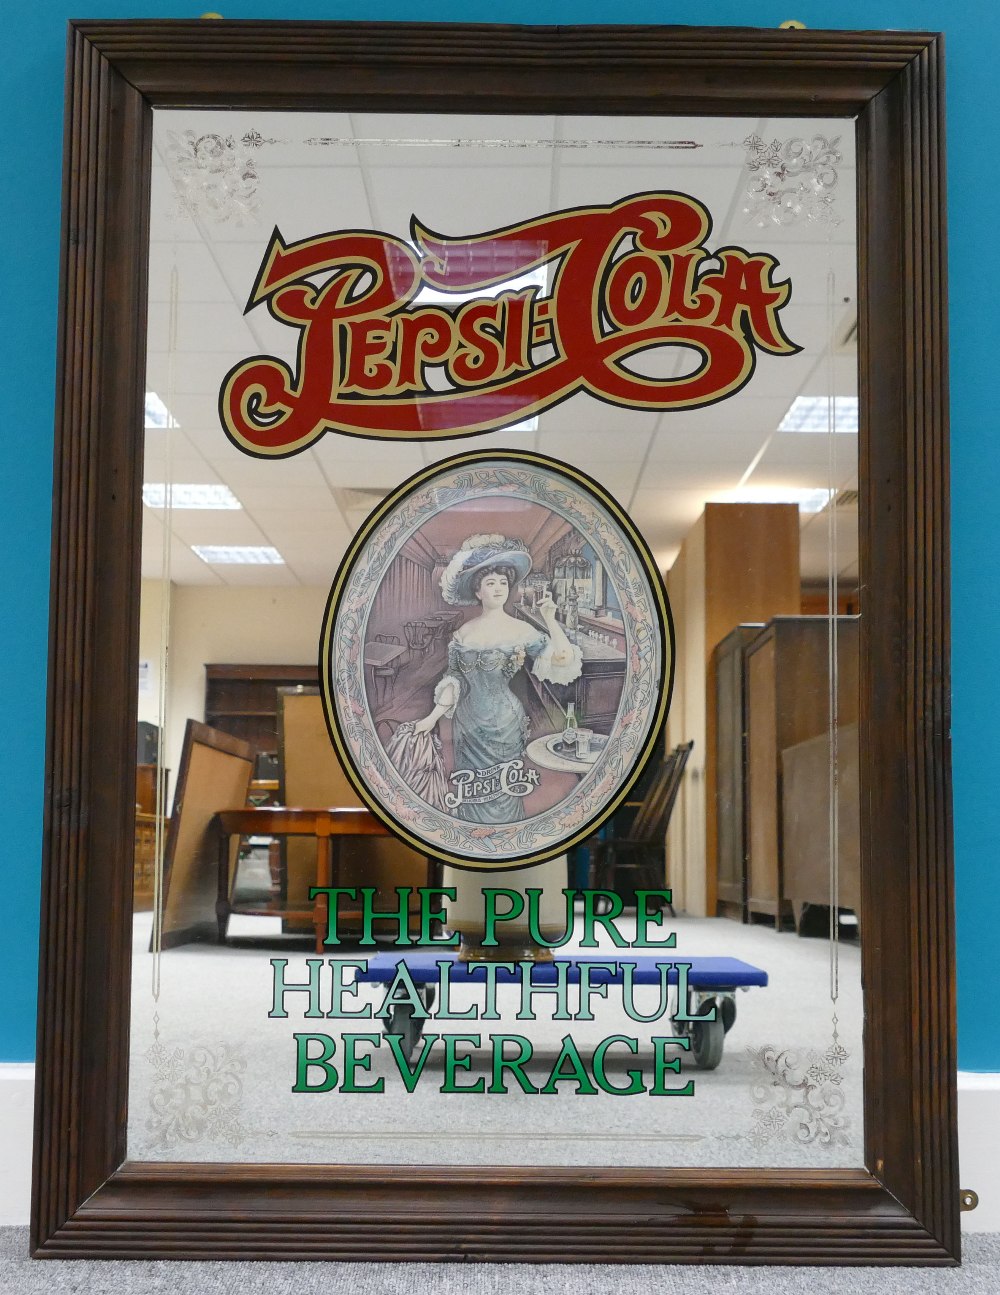 Vintage framed advertising mirror for Pe